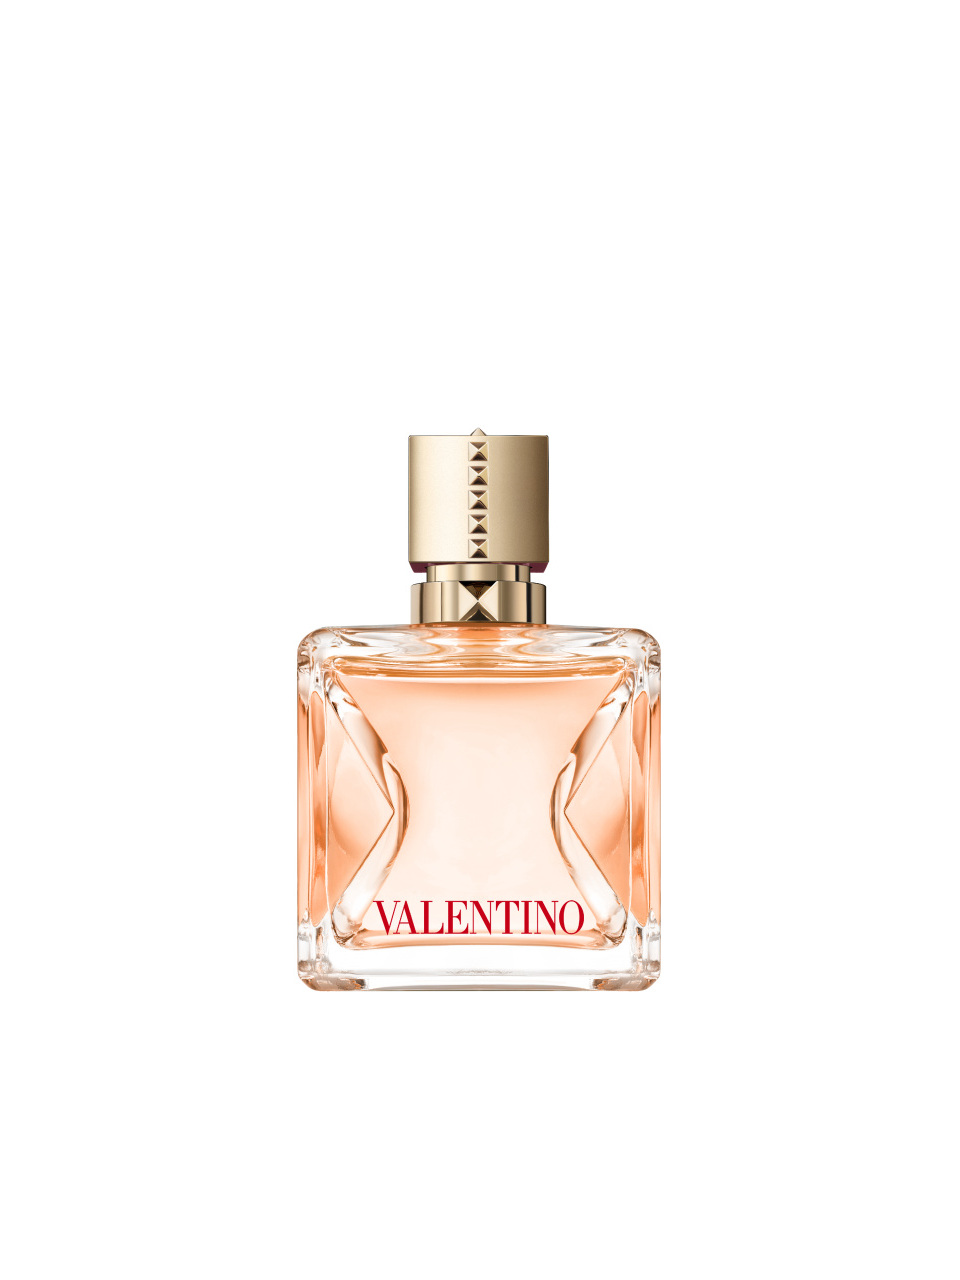 Valentino Voce Viva Eau de Parfum Intense 100 ml null - onesize - 1